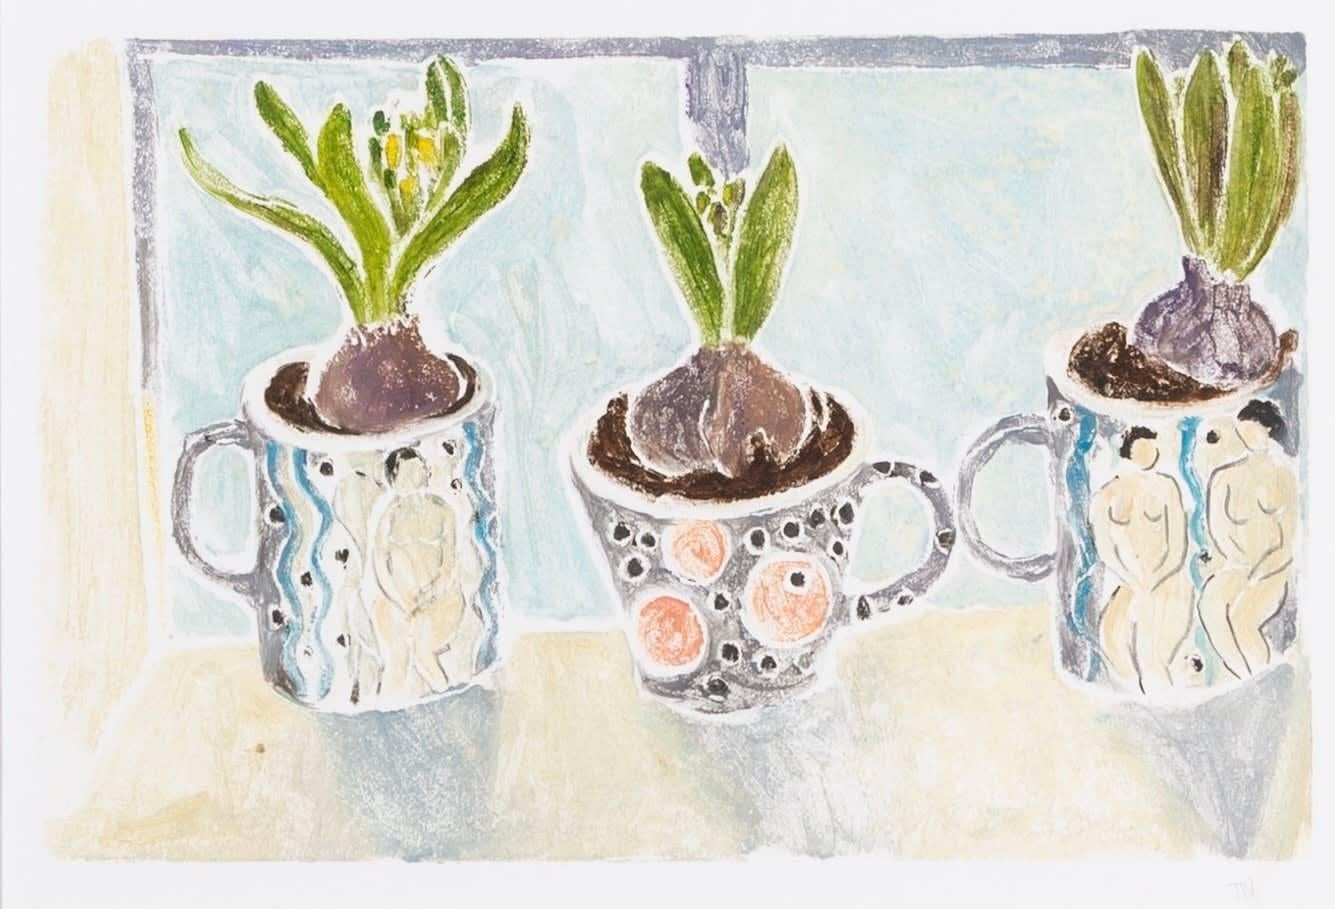 Untitled (Hyacinth Bulbs in Mugs), Styrofoam Print by Tessa Newcomb